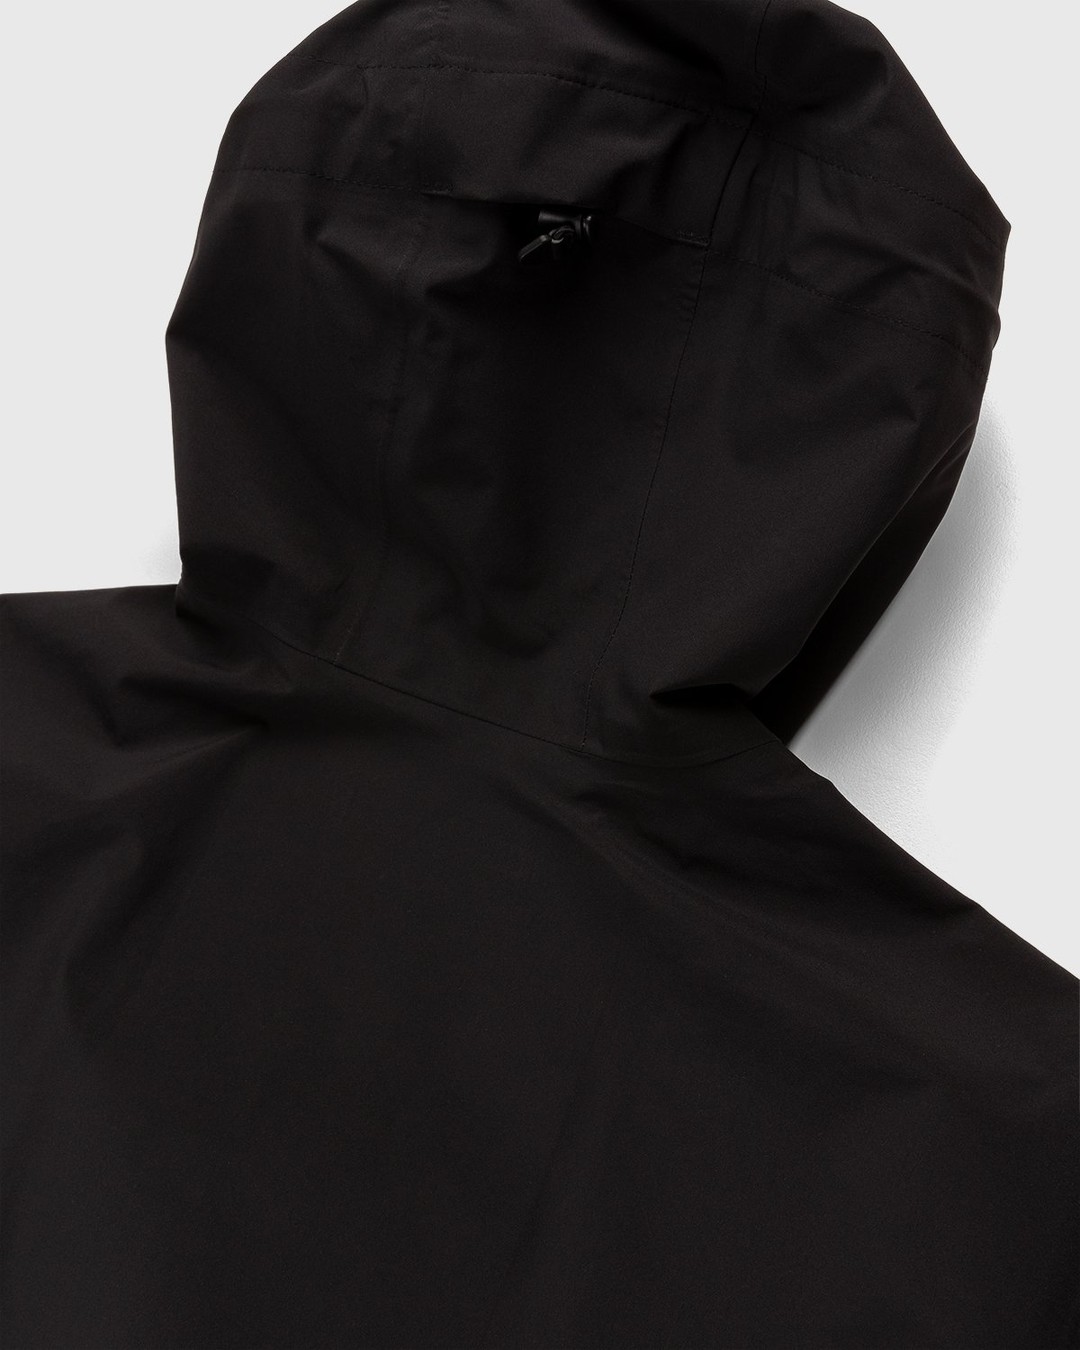 Jack Wolfskin x Highsnobiety – HS Sports Rain Jacket Black - Outerwear - Black - Image 3